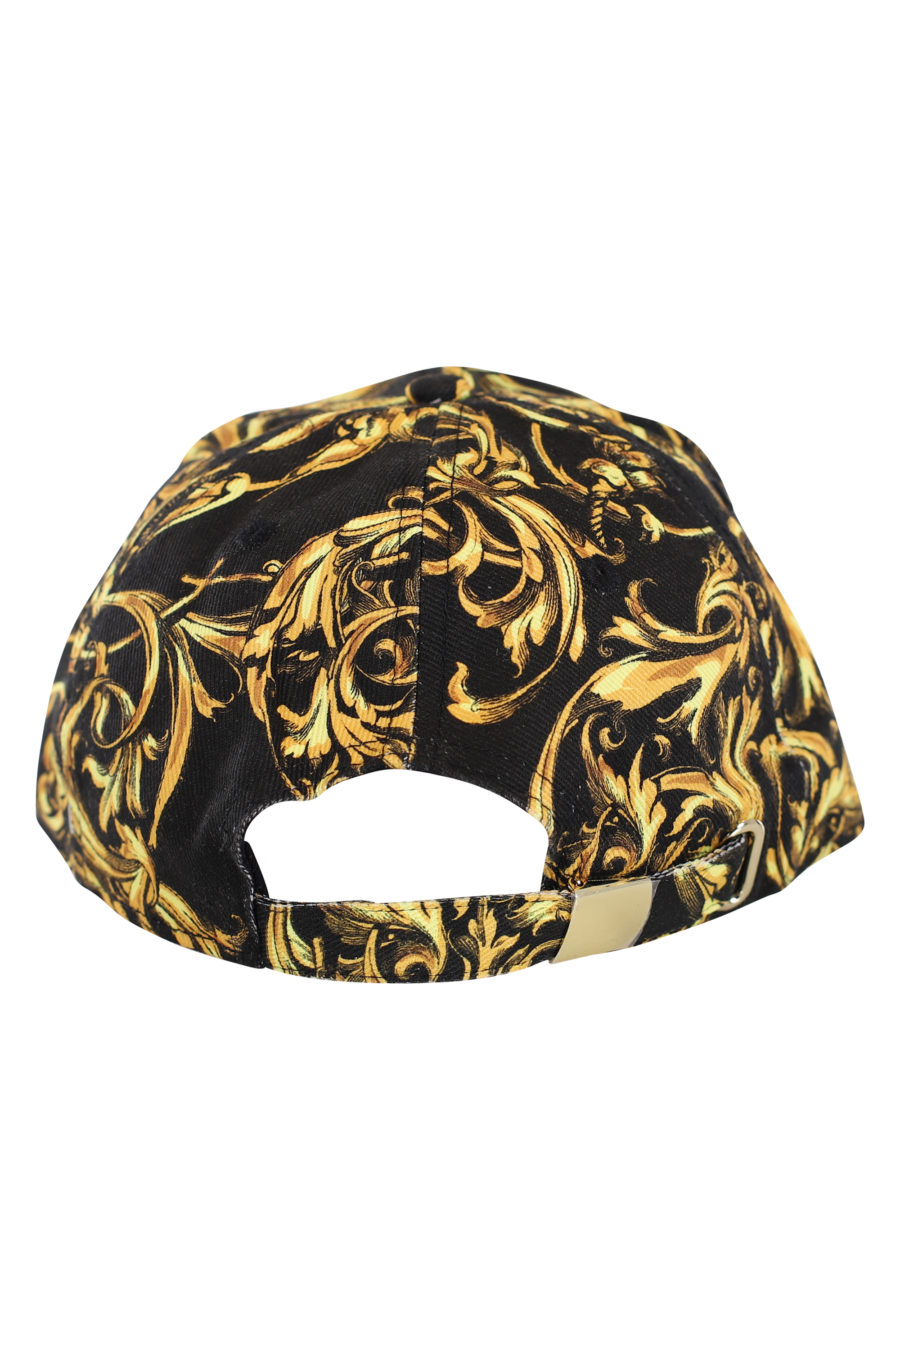 Gorra negra con estampado barroco dorado - IMG 0149